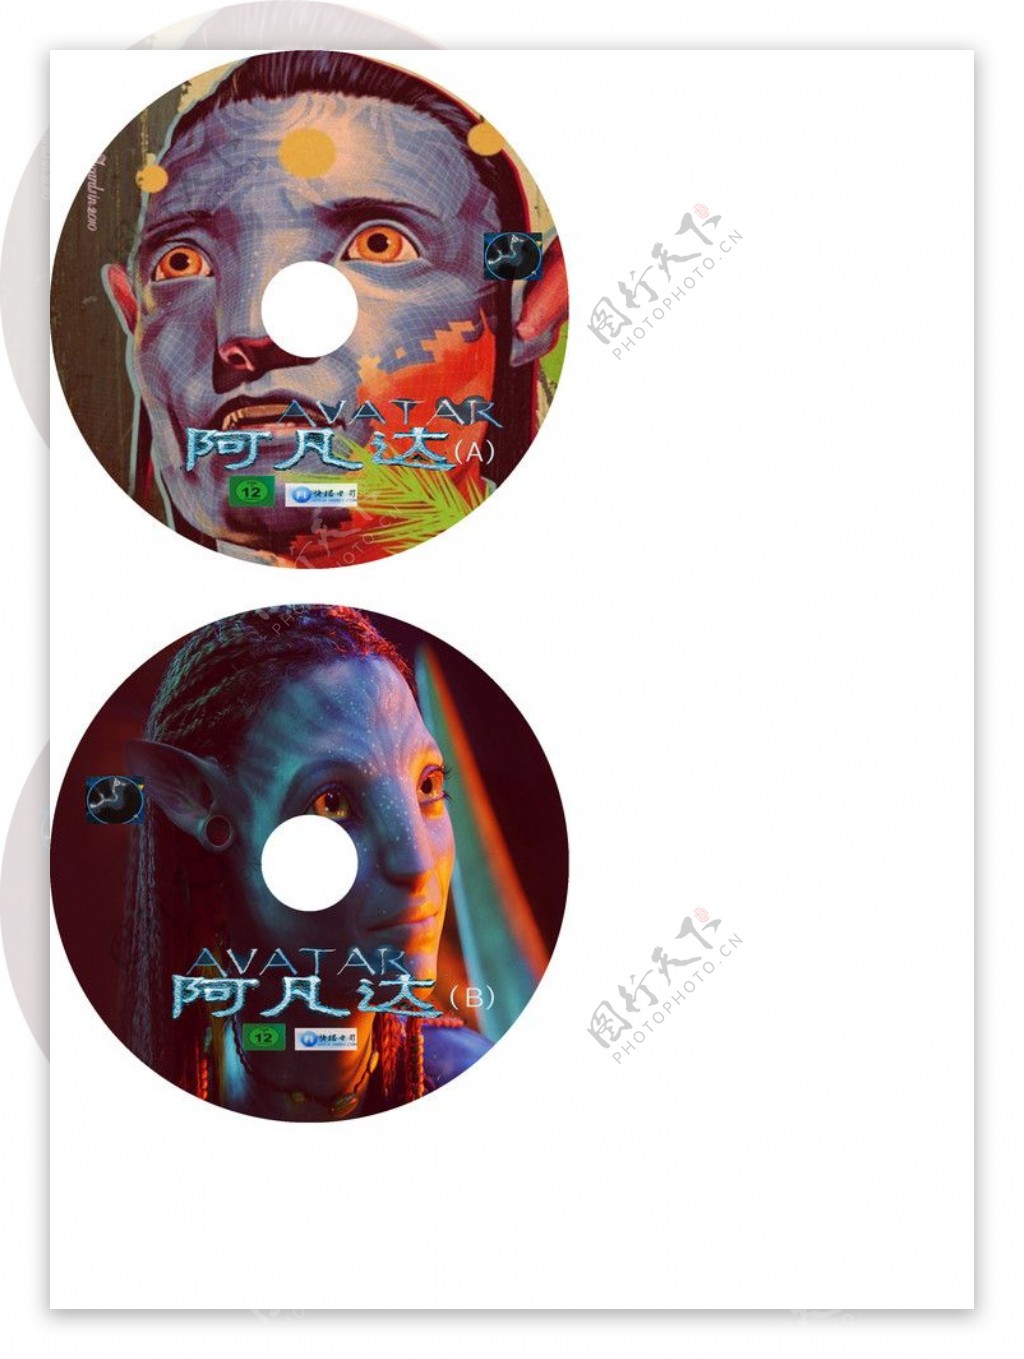 CD包装设计图片